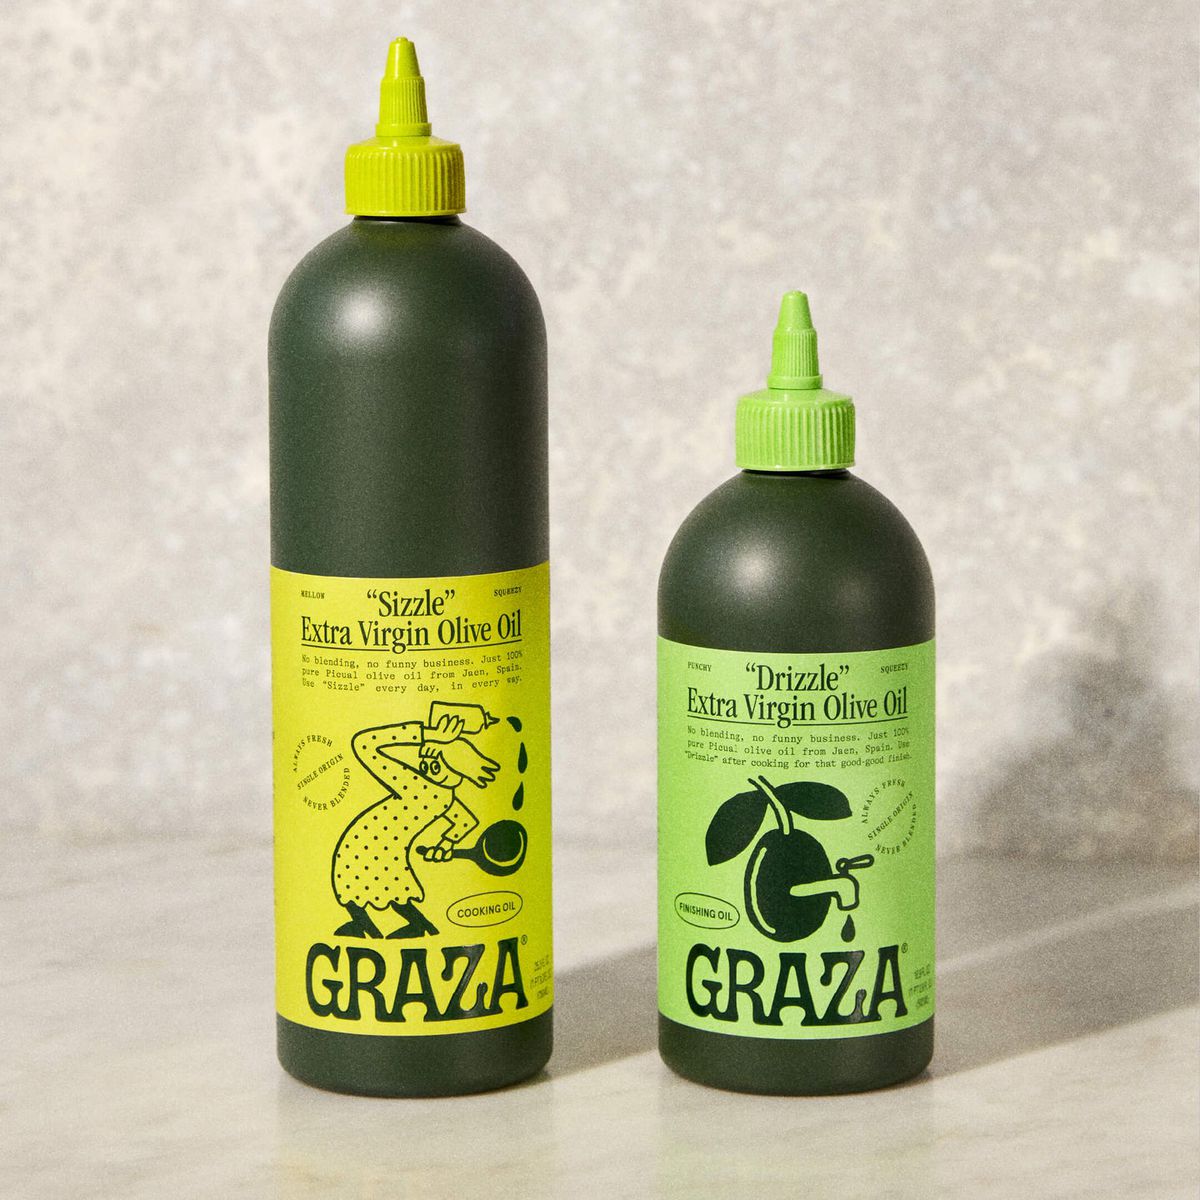 Two bottles of Graza olive oil